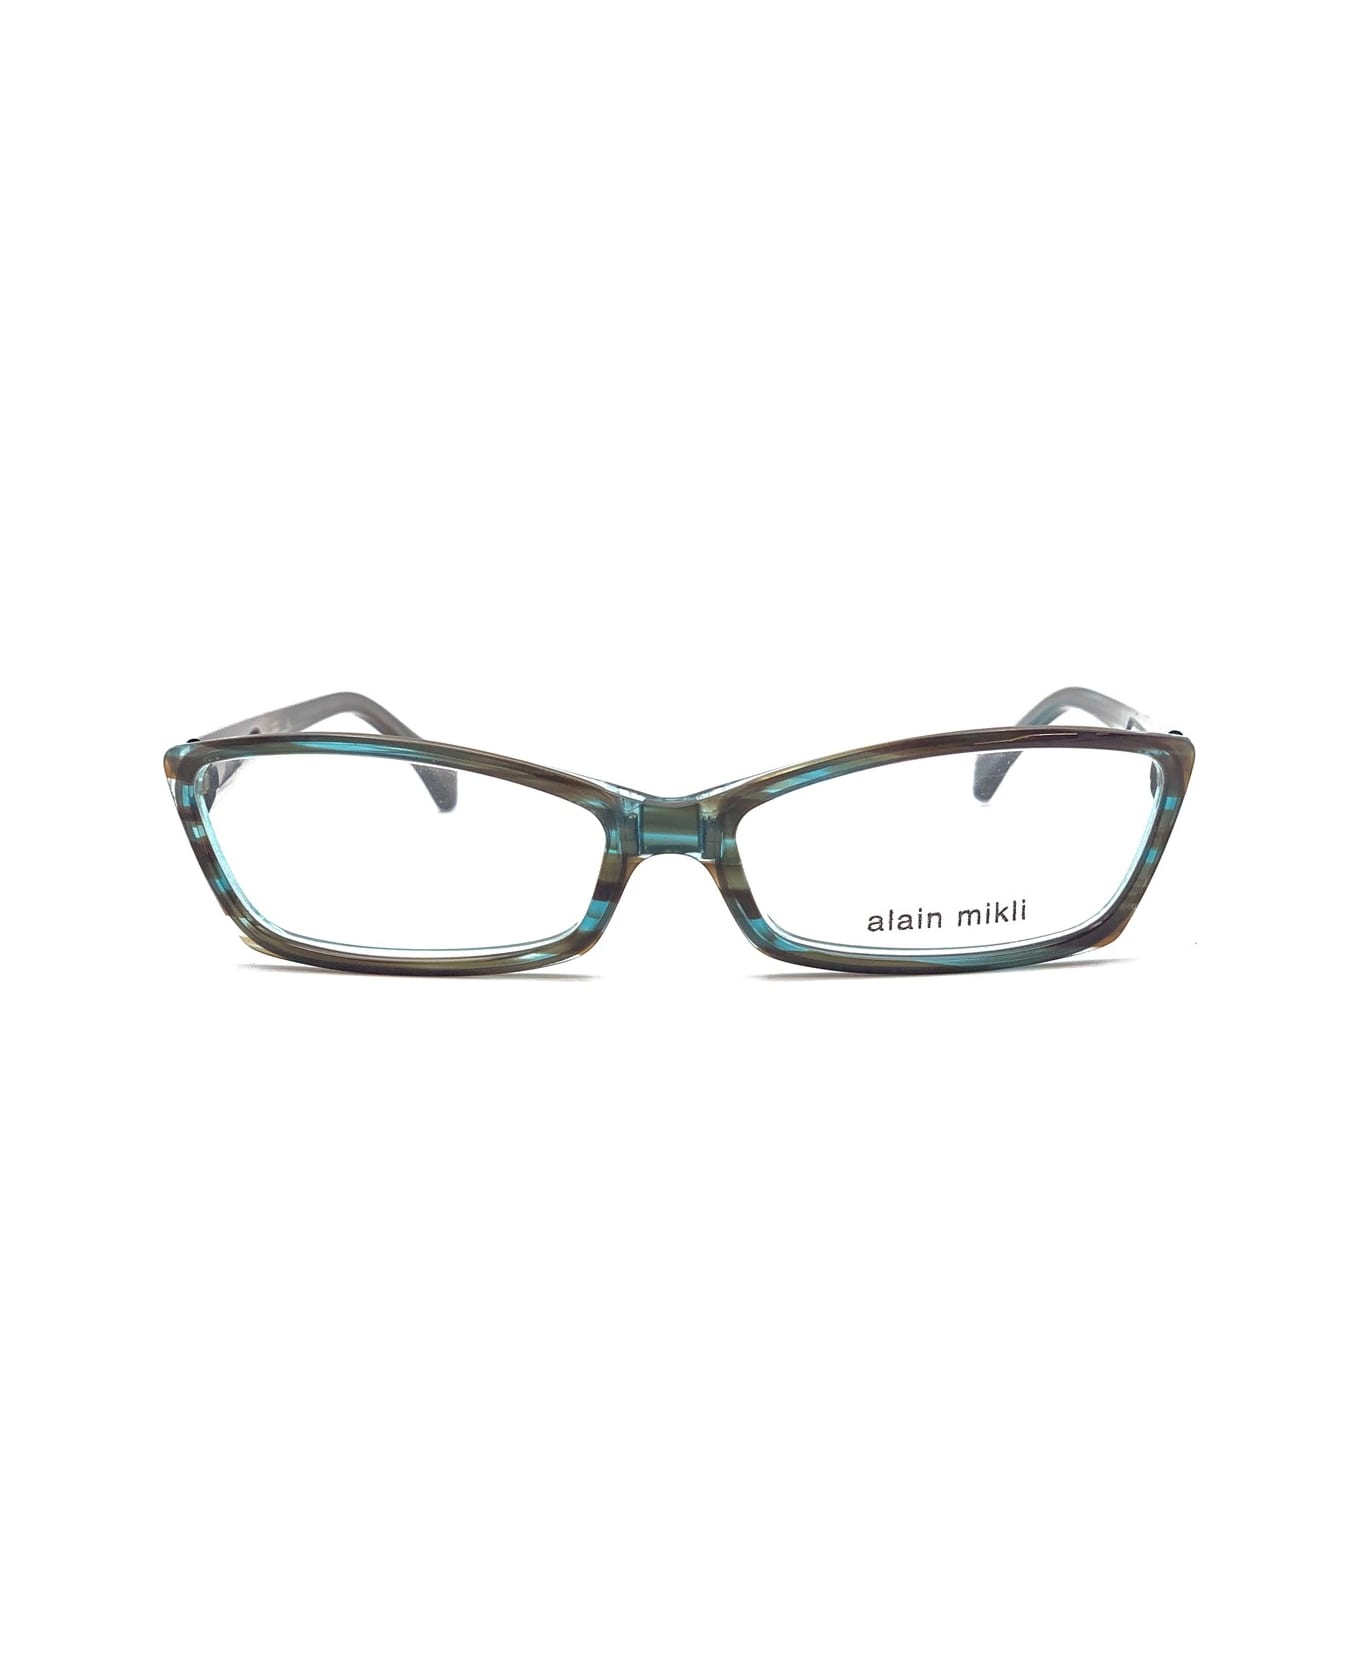 Alain Mikli A013 Glasses - Verde アイウェア